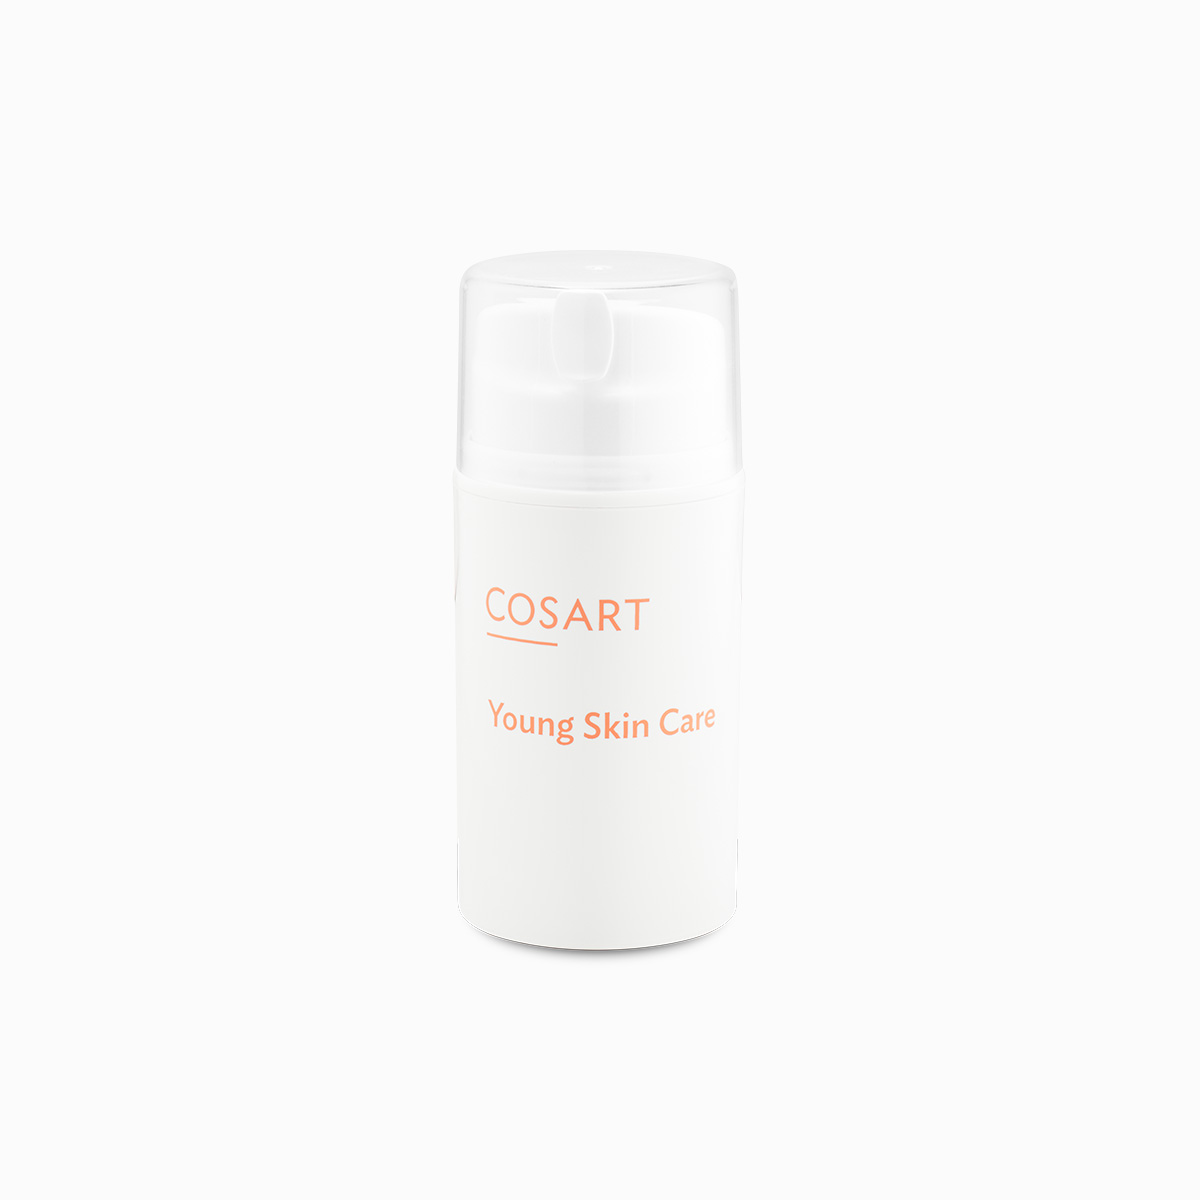 Young Skin Care | COSART | Der professionelle Kosmetik-Partner